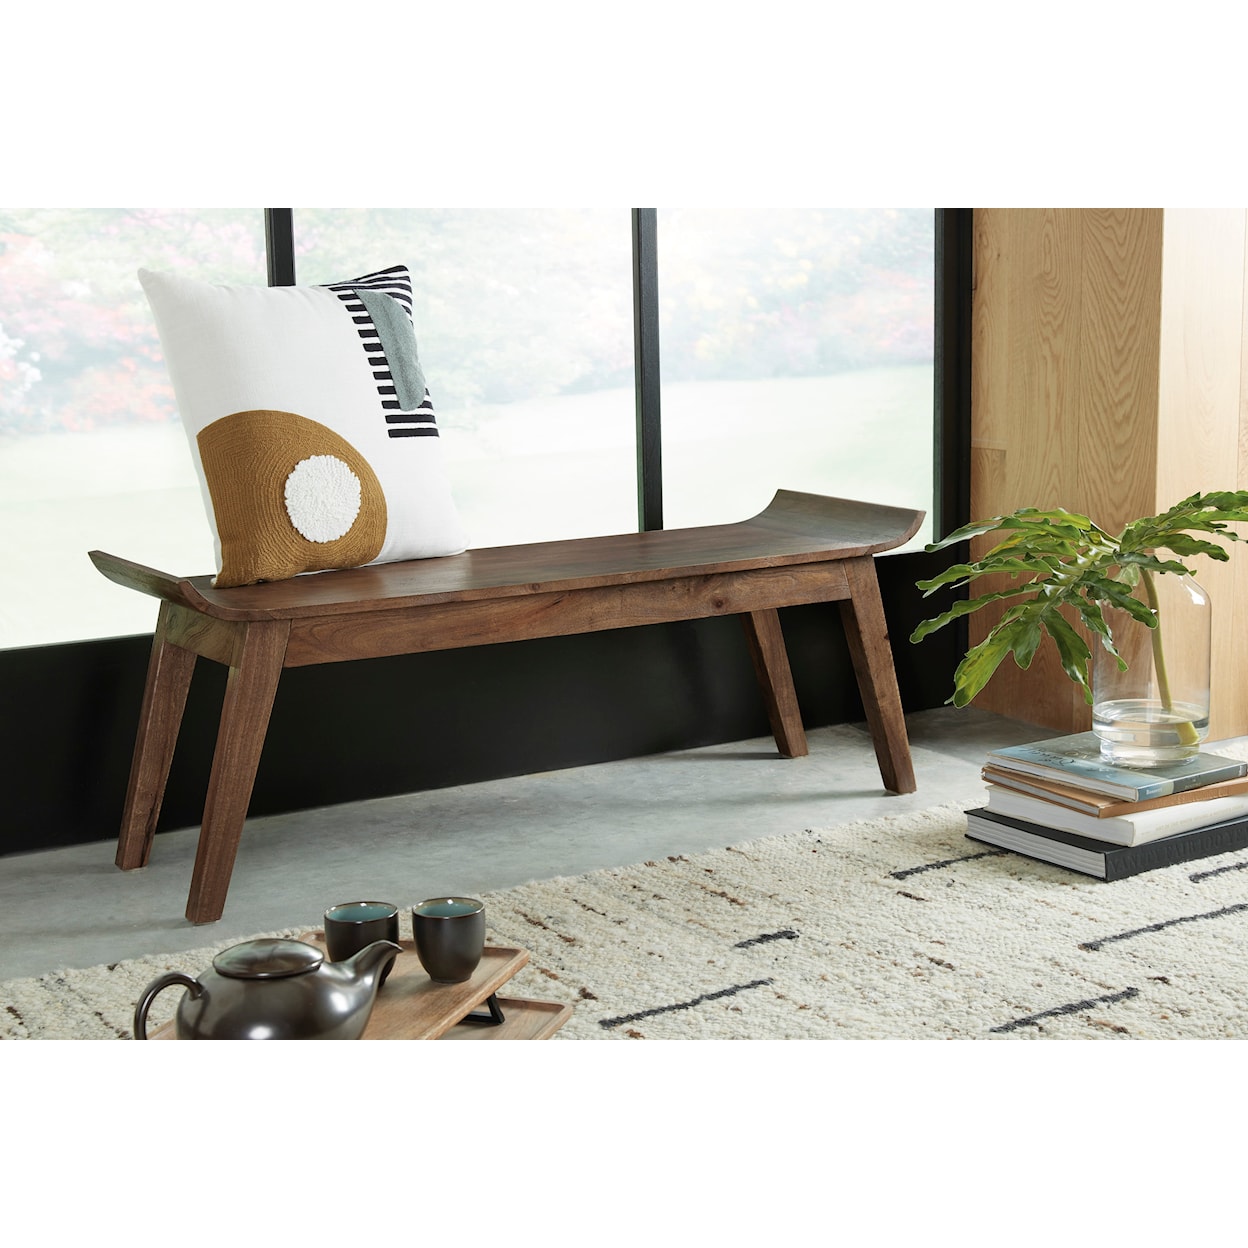 Ashley Furniture Signature Design Abbianna Accent Bench